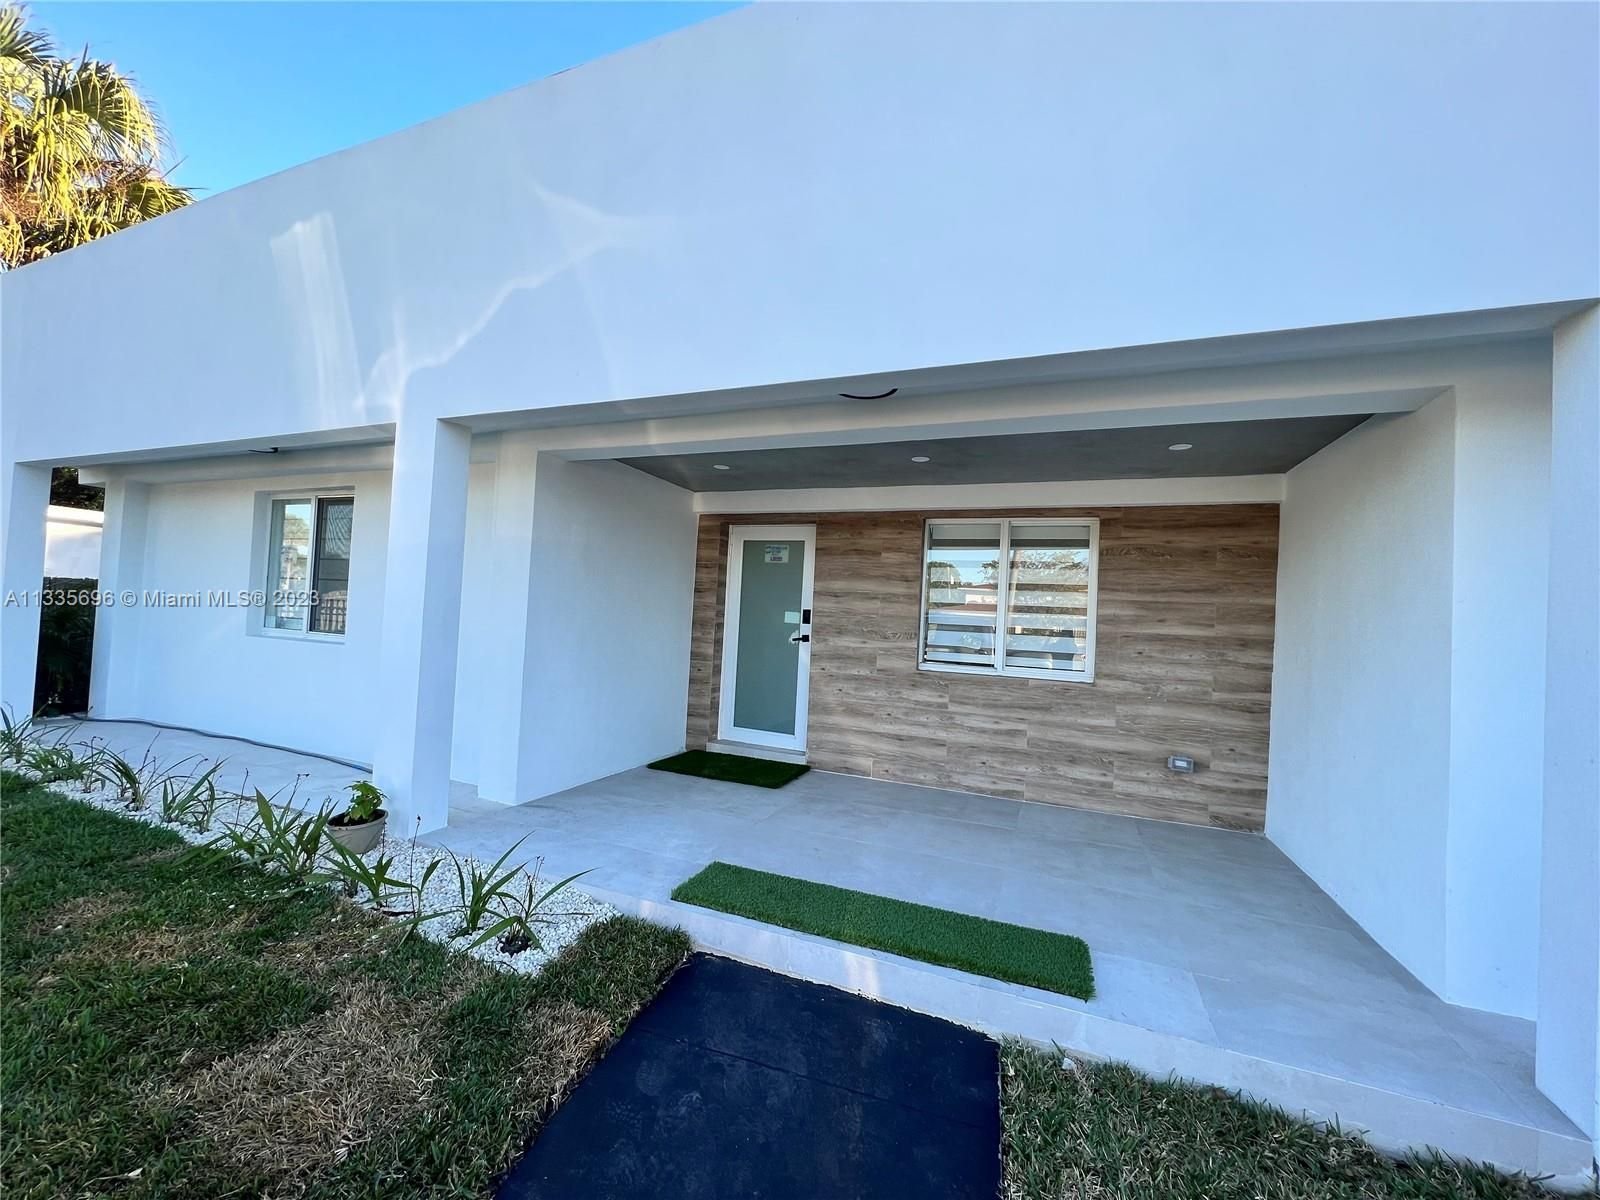 Real estate property located at 520 135th St, Miami-Dade County, North Miami, FL